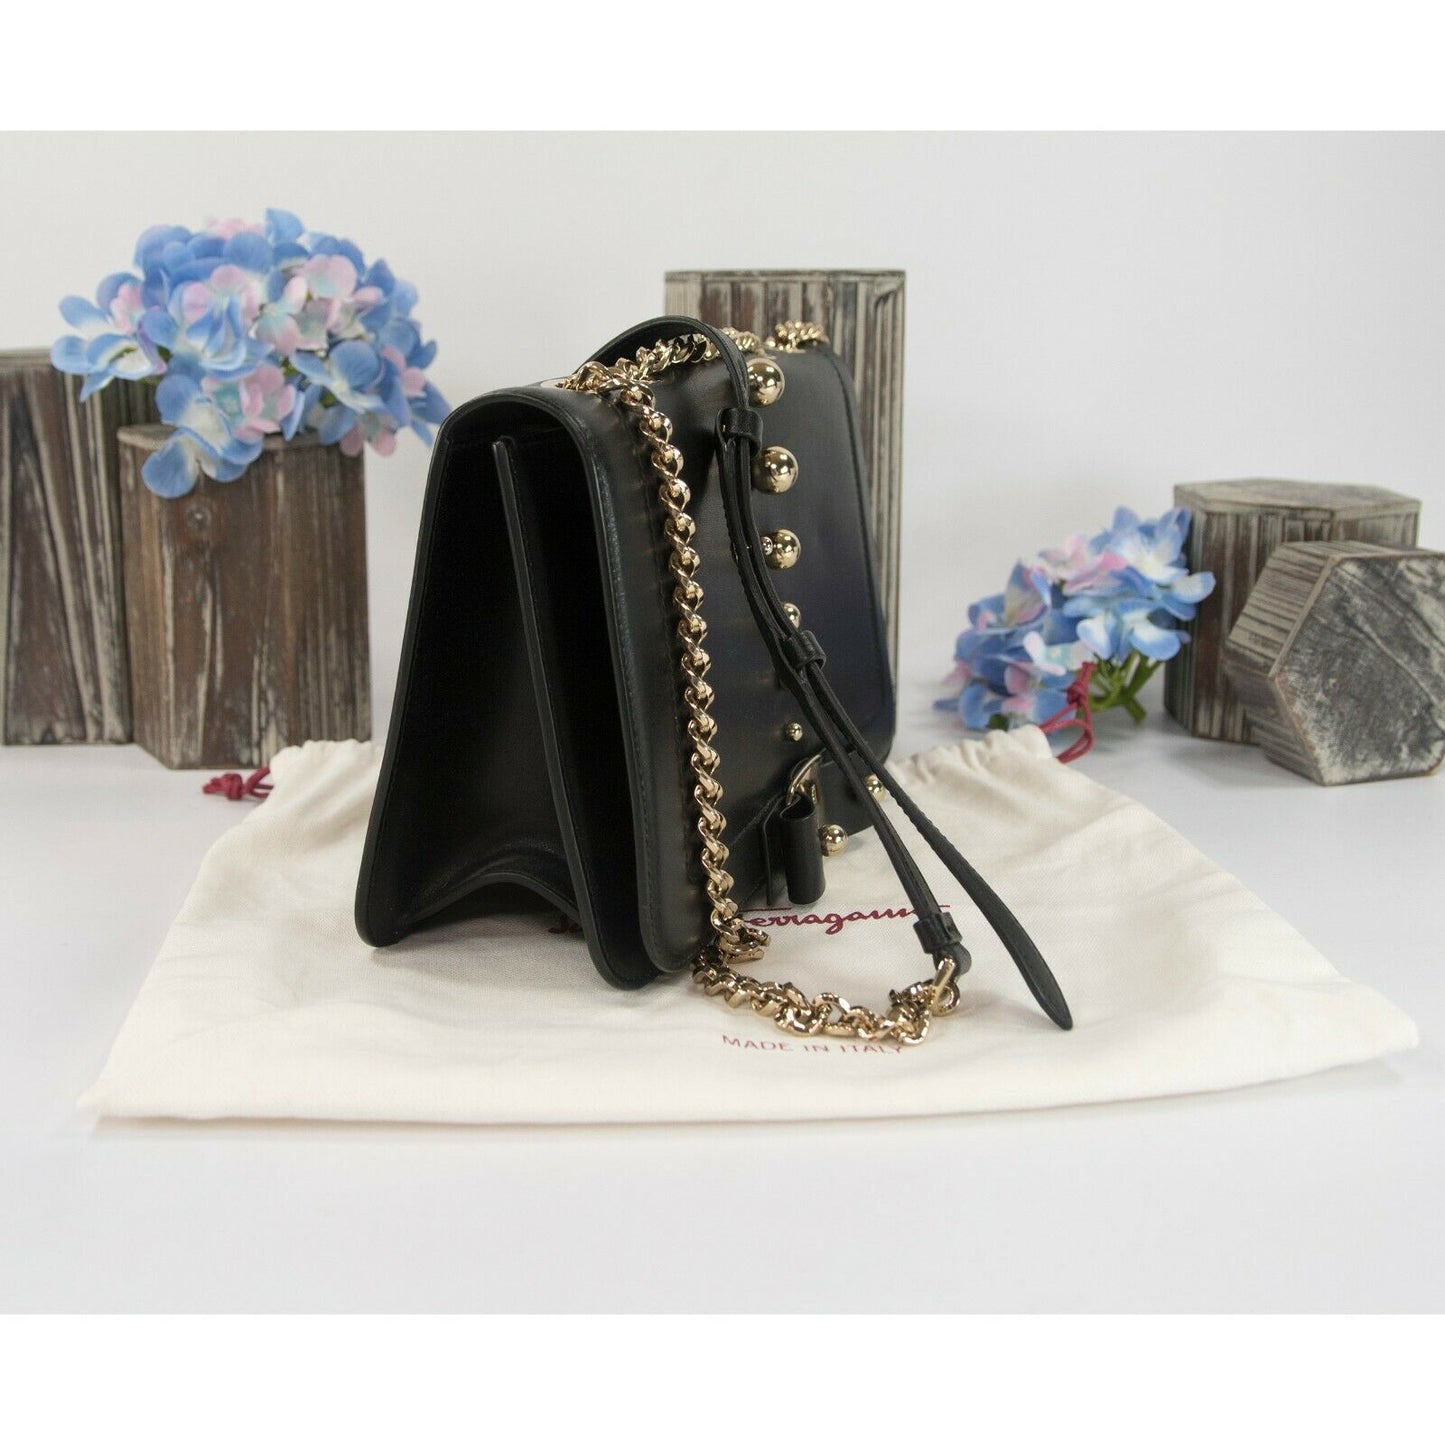 Salvatore Ferragamo Black Leather Studded Bow Crossbody Bag NWT